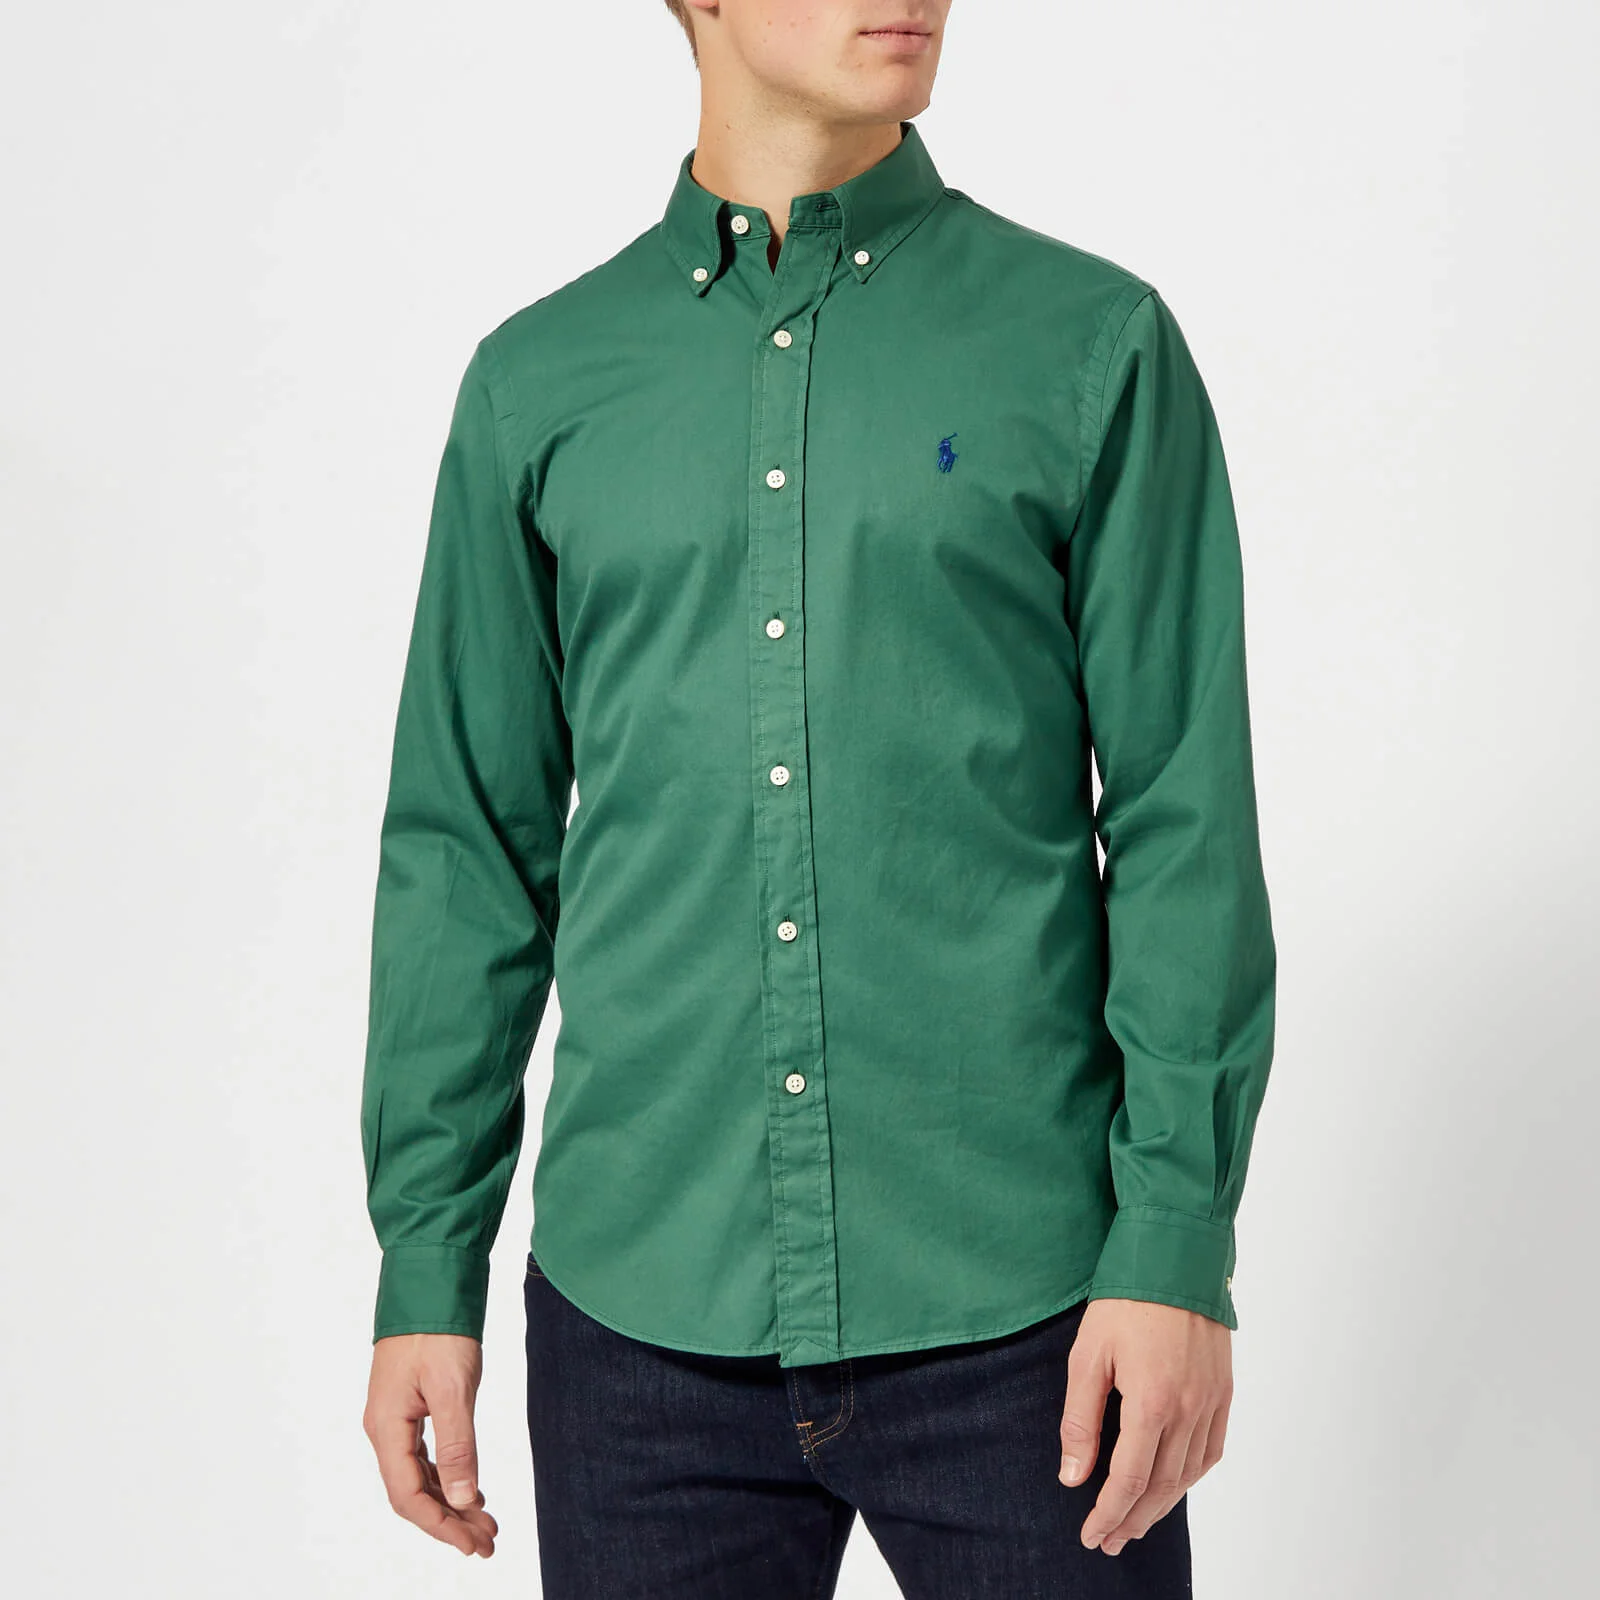 Polo Ralph Lauren Men's Garment Dye Twill Long Sleeve Shirt - Washed Forest Image 1